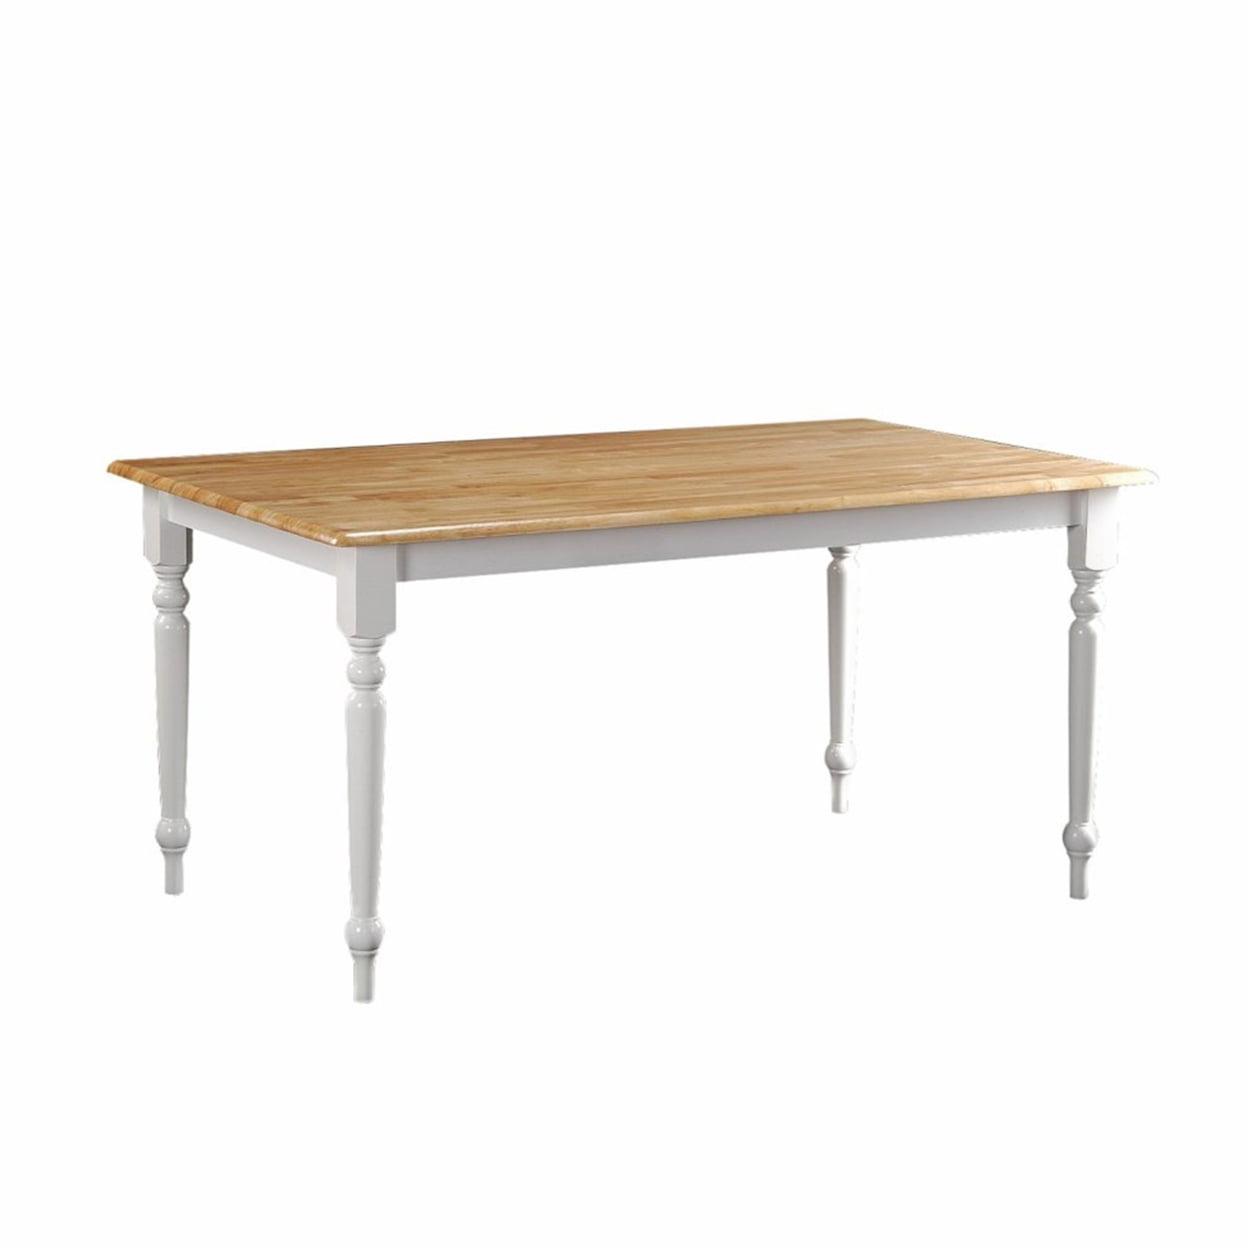 Elegant Transitional Rectangular Dining Table in Brown & White